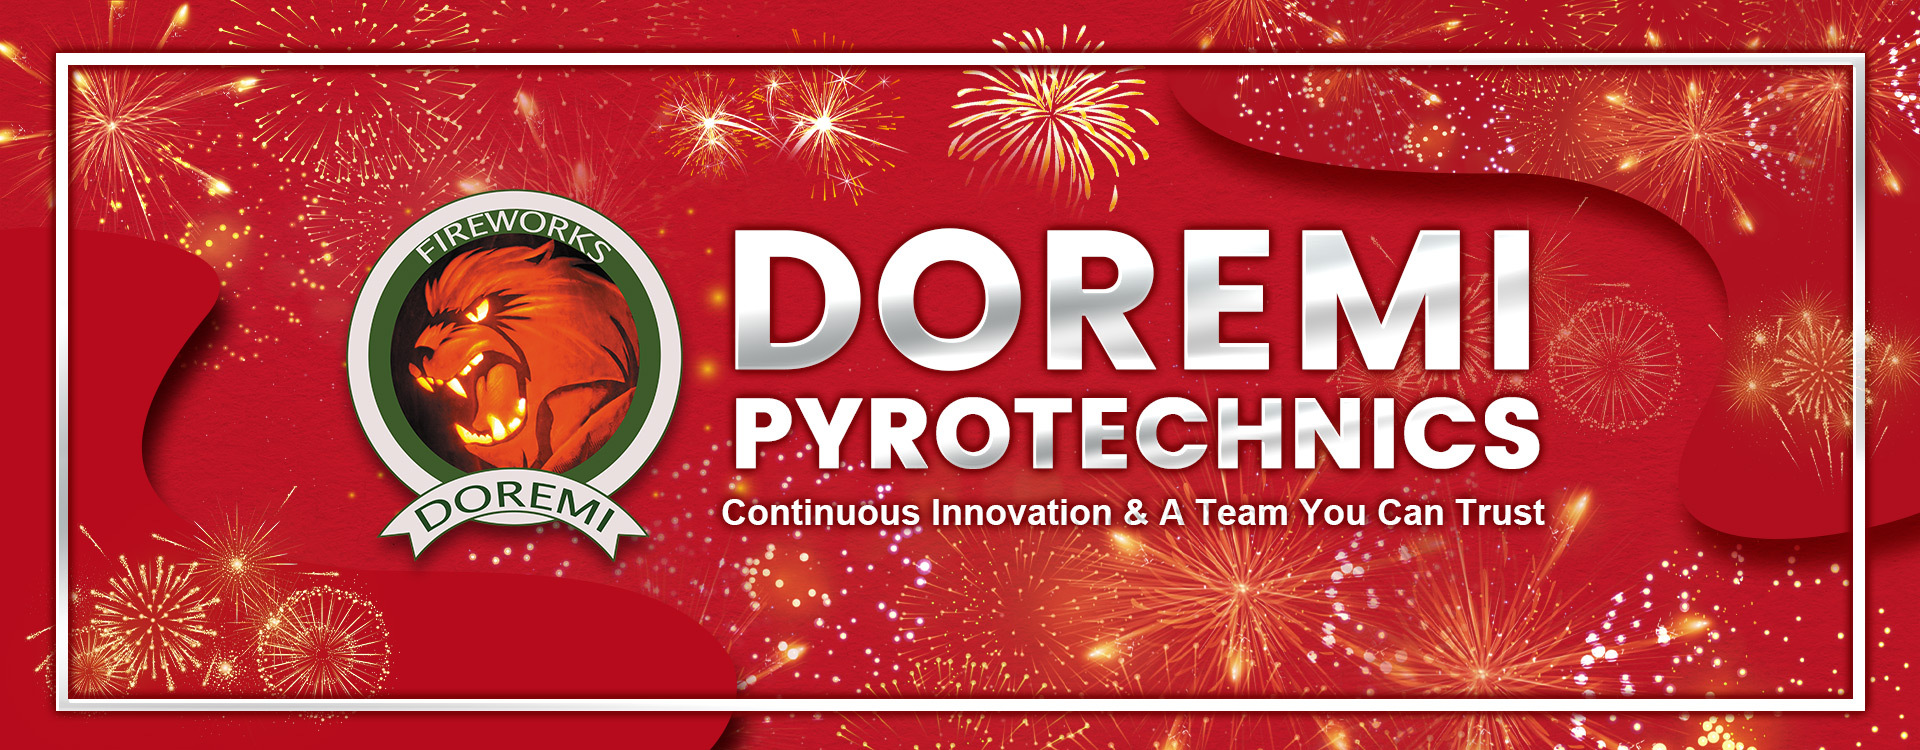 Doremi Pyrotechnics Co., Ltd.